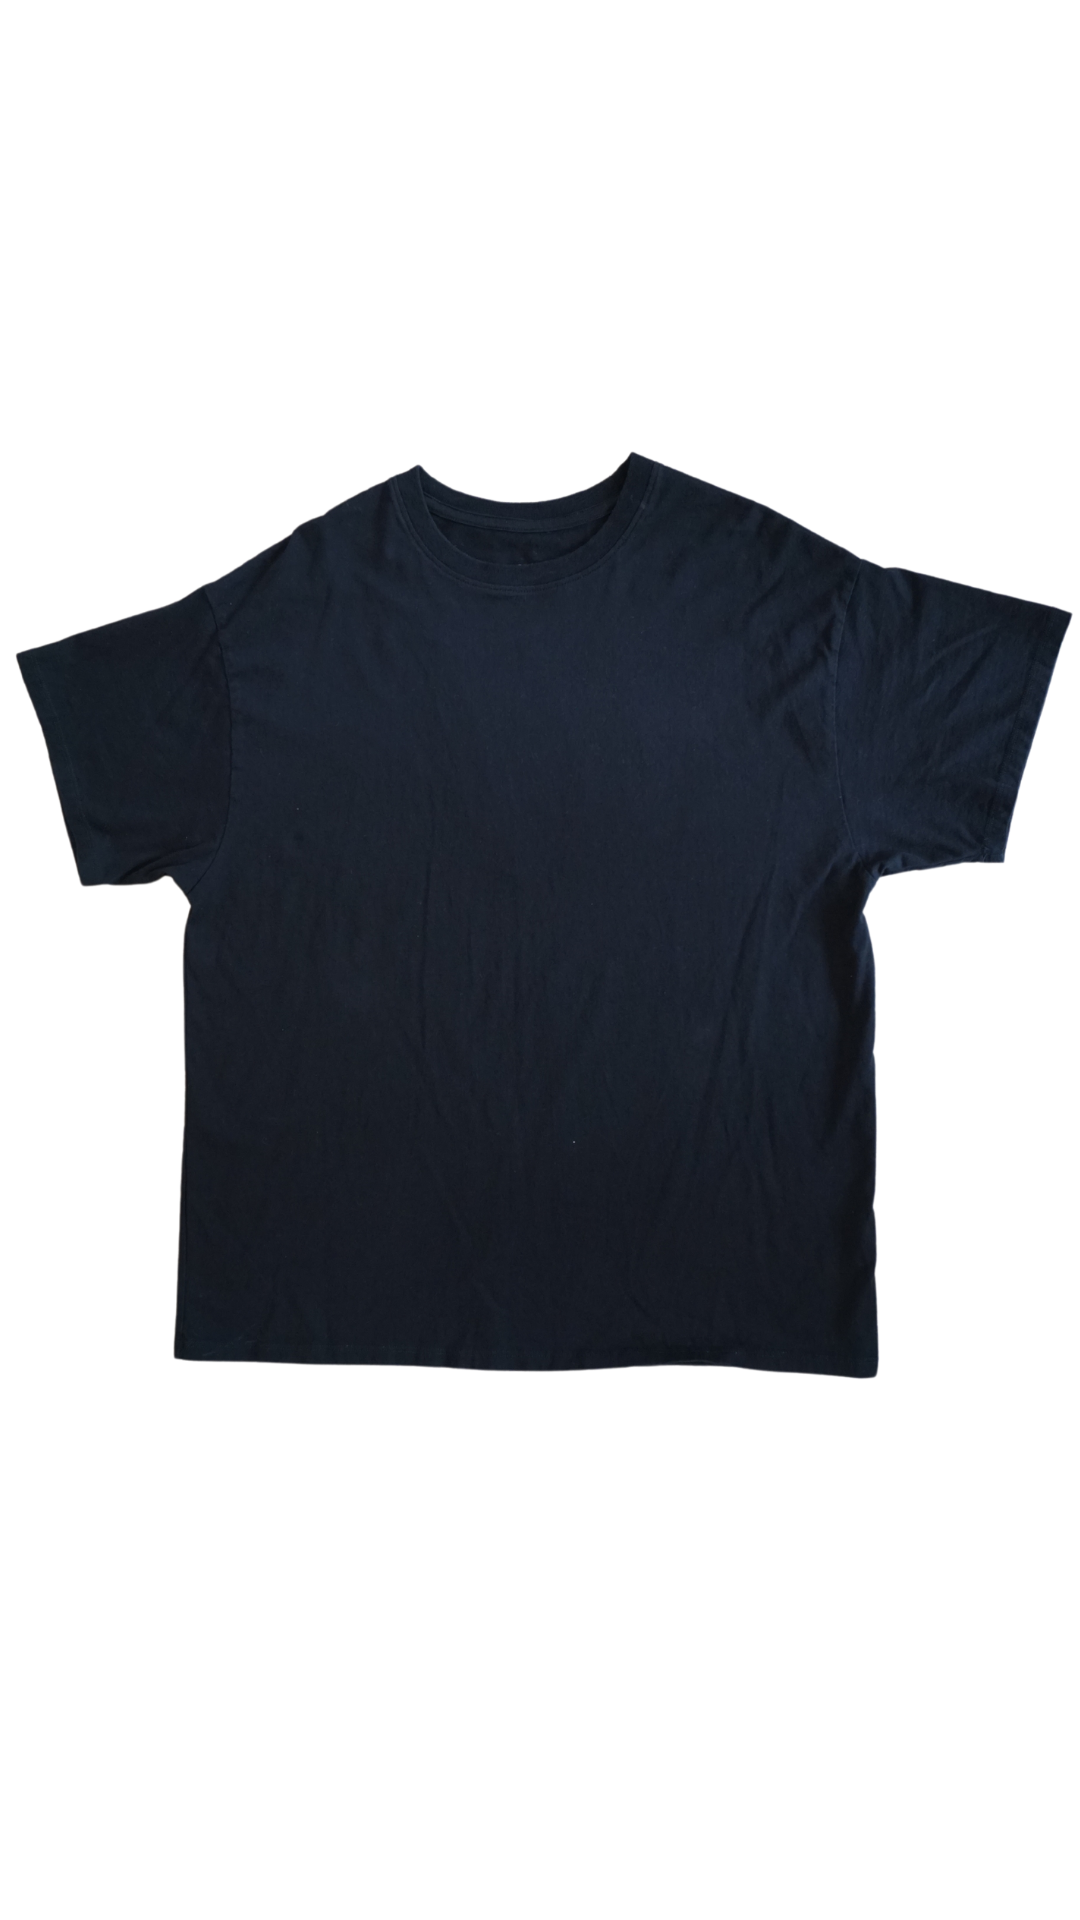 The Fontana T-Shirt